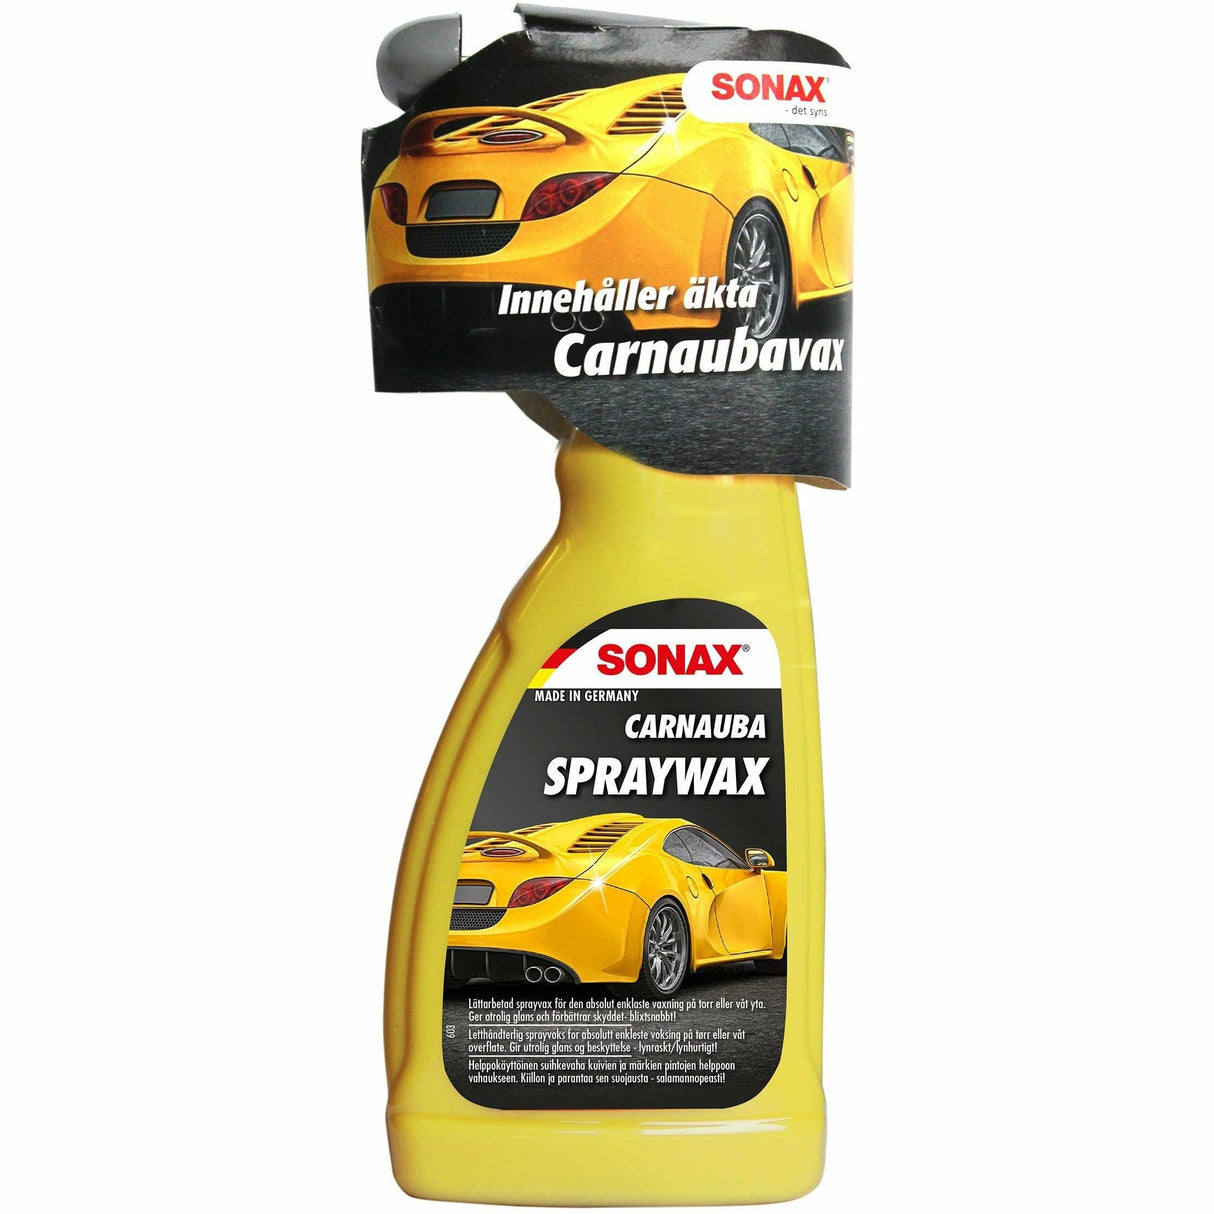 SONAX Carnauba Spraywax - Xpert Cleaning